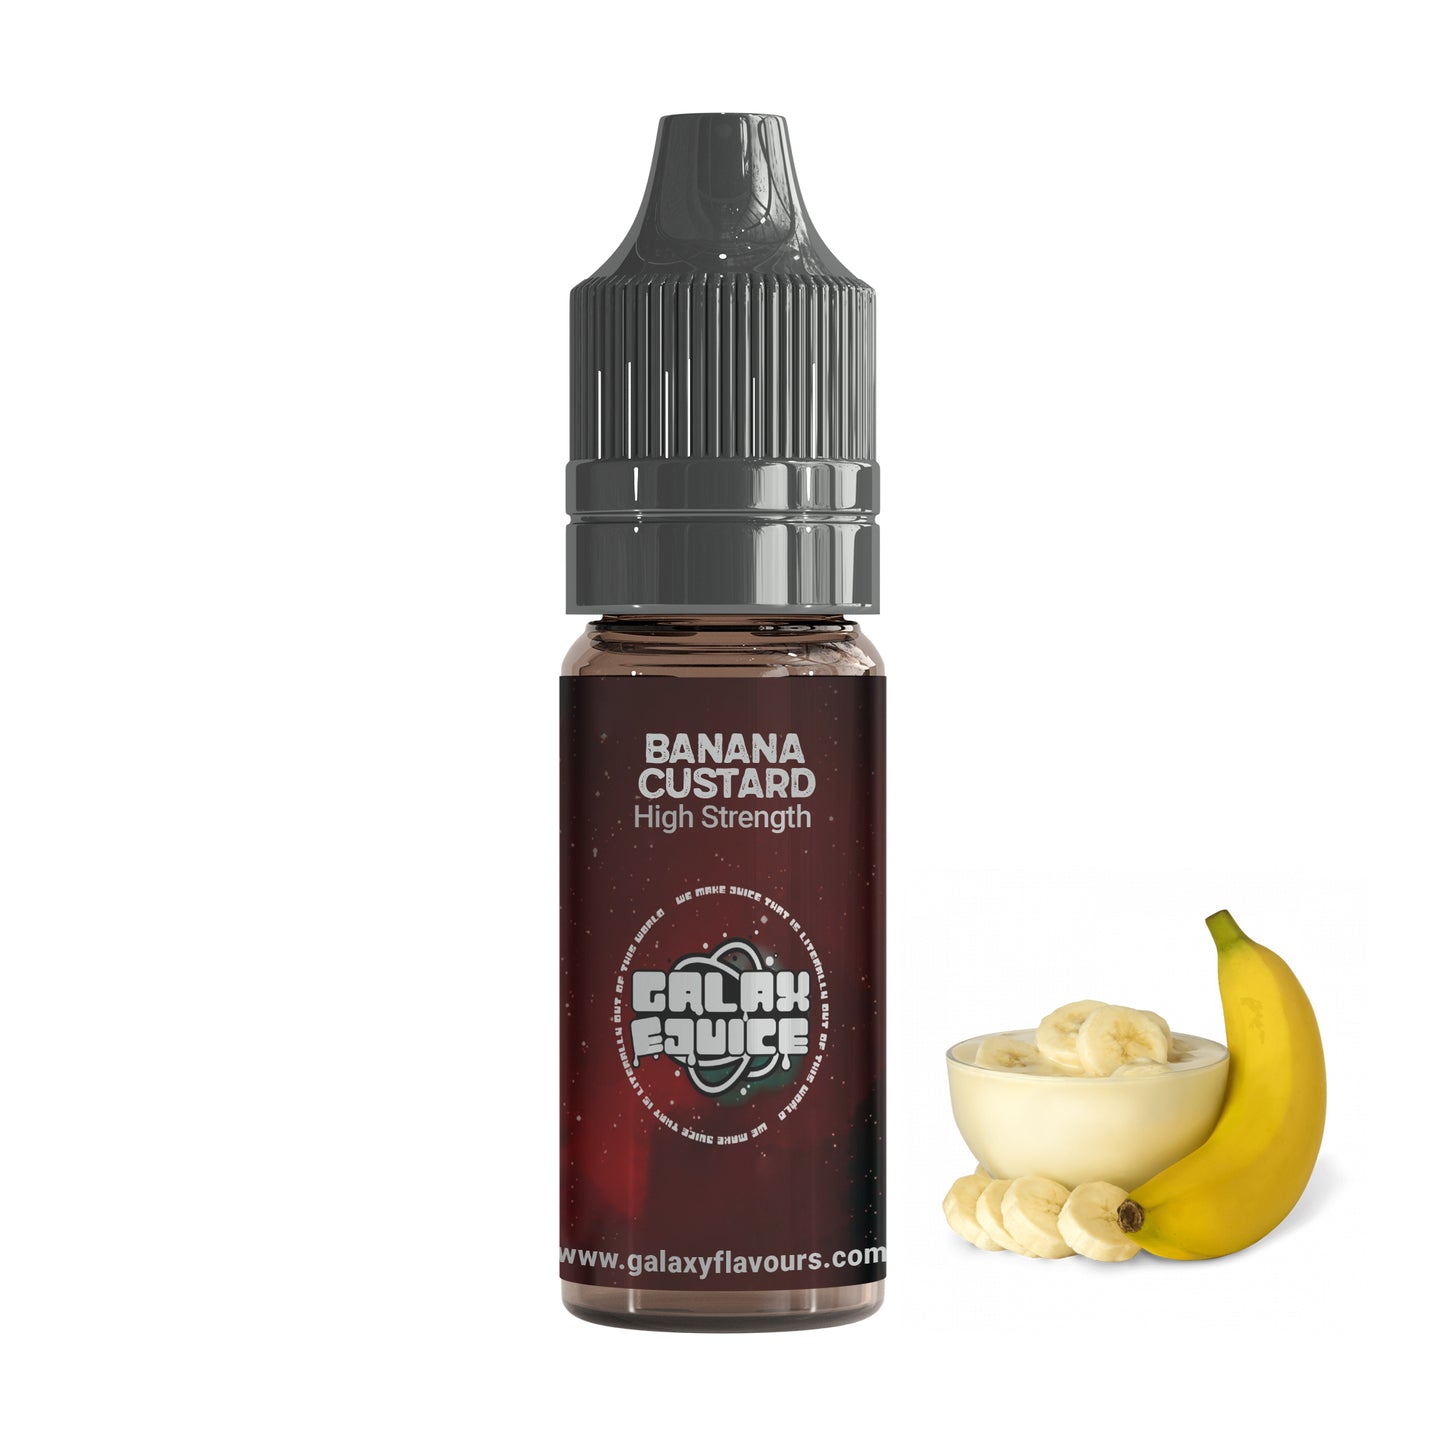 Banana Custard High Strength Professional Flavouring.